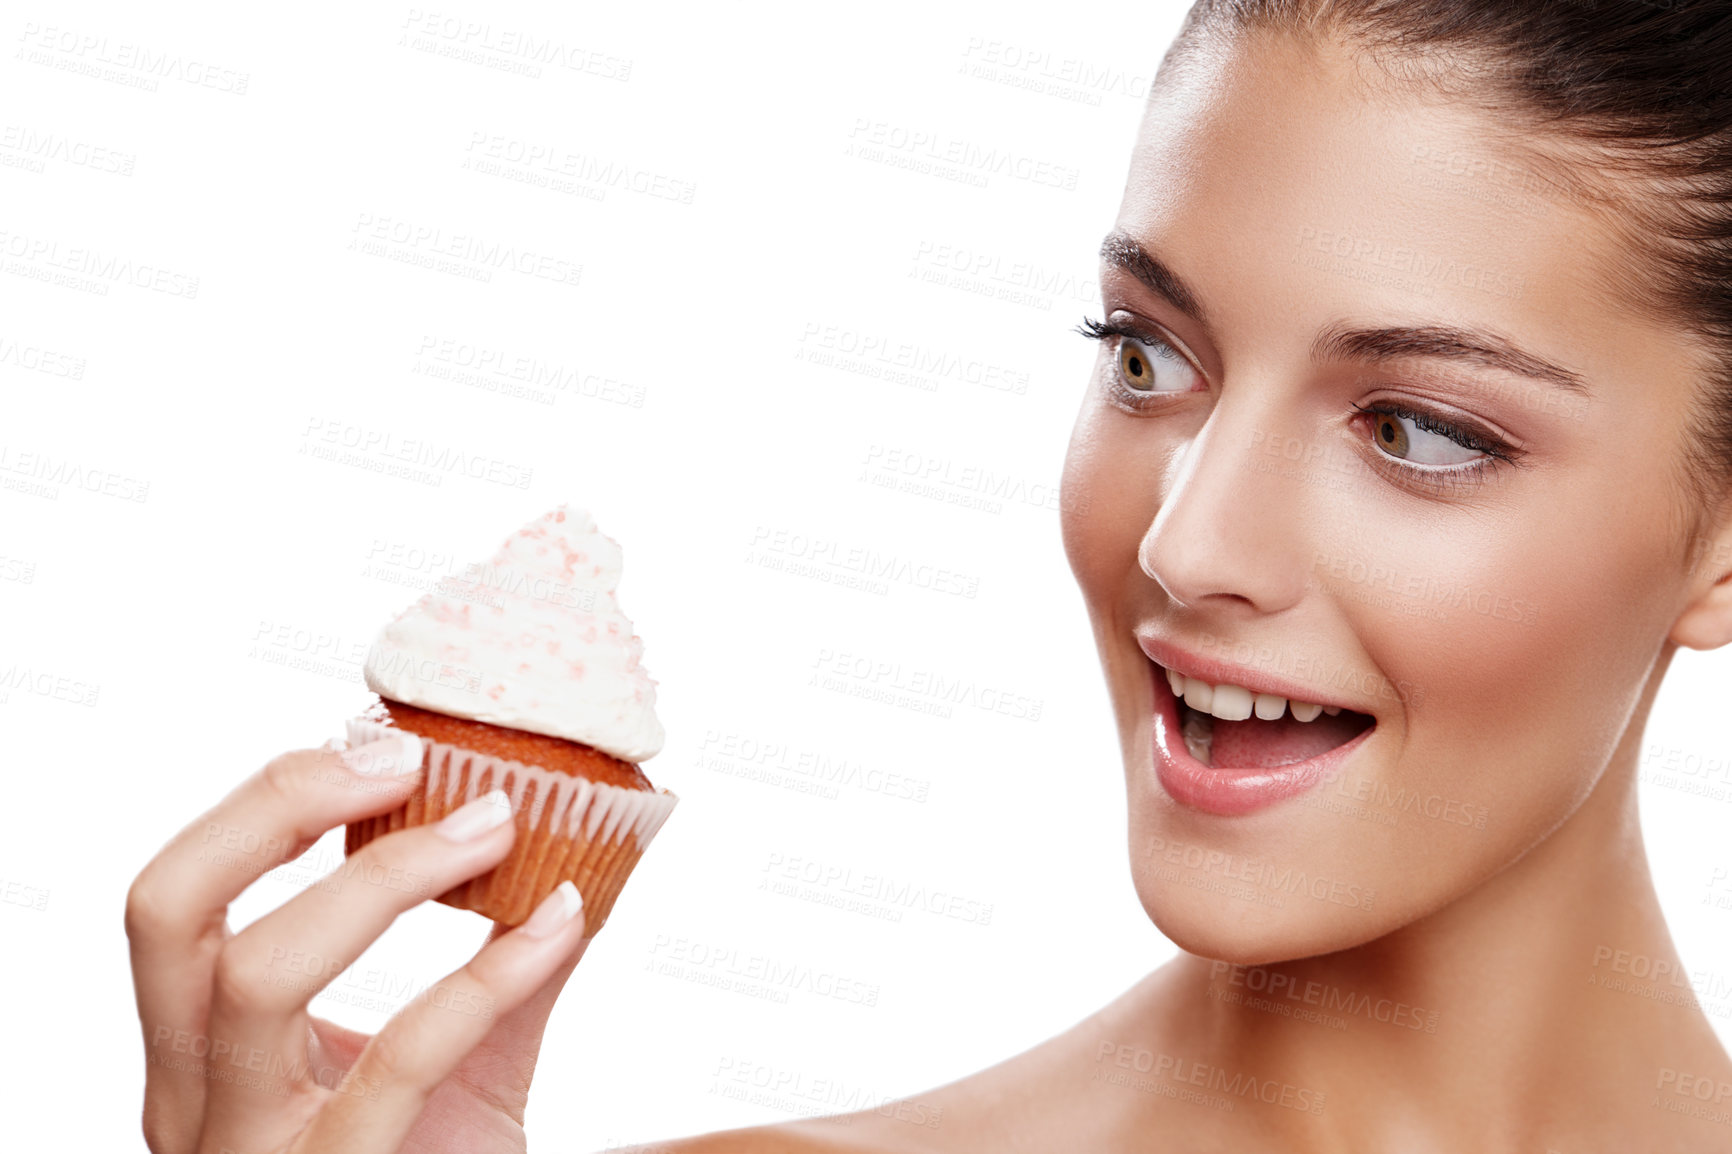 Buy stock photo Studio shot of a beautiful woman holding up a cupcake